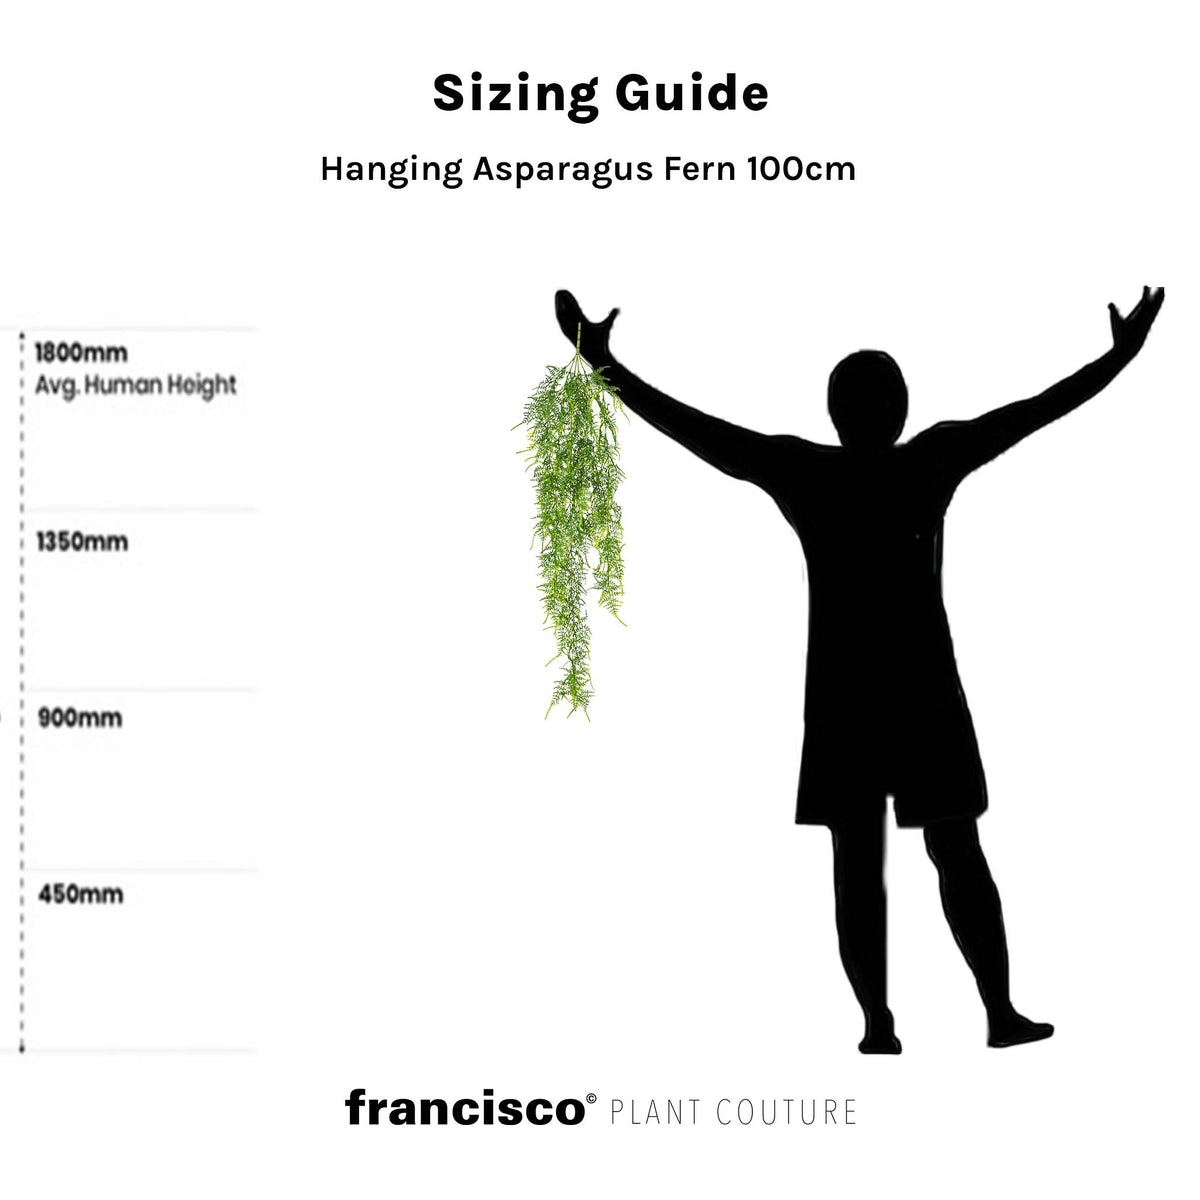 Hanging Asparagus Fern 100cm